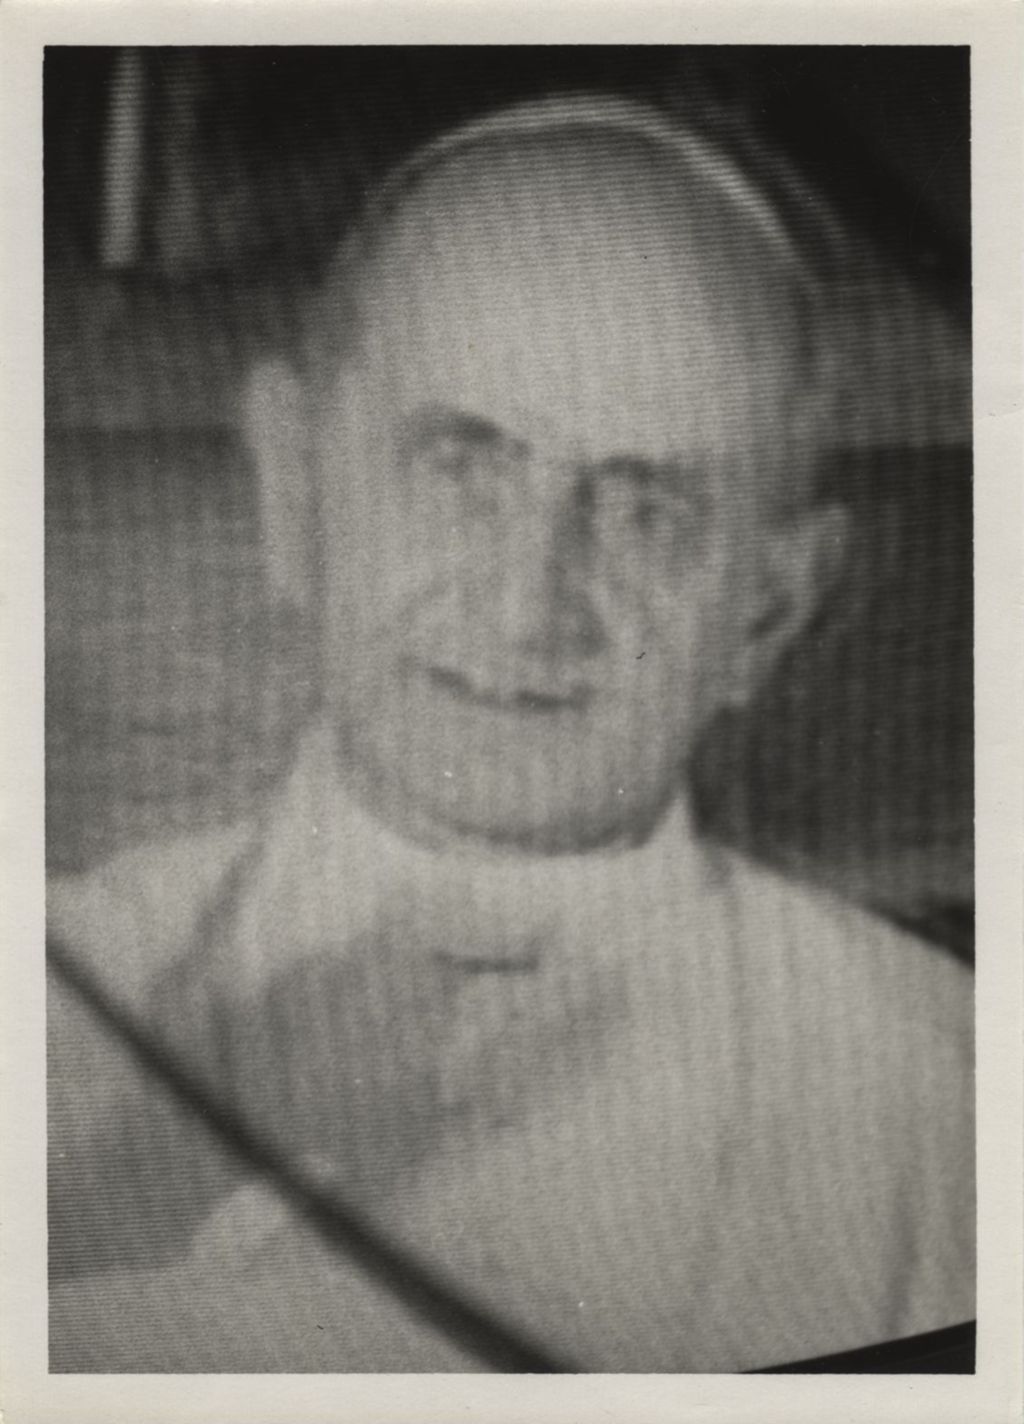 Miniature of Pope Paul VI